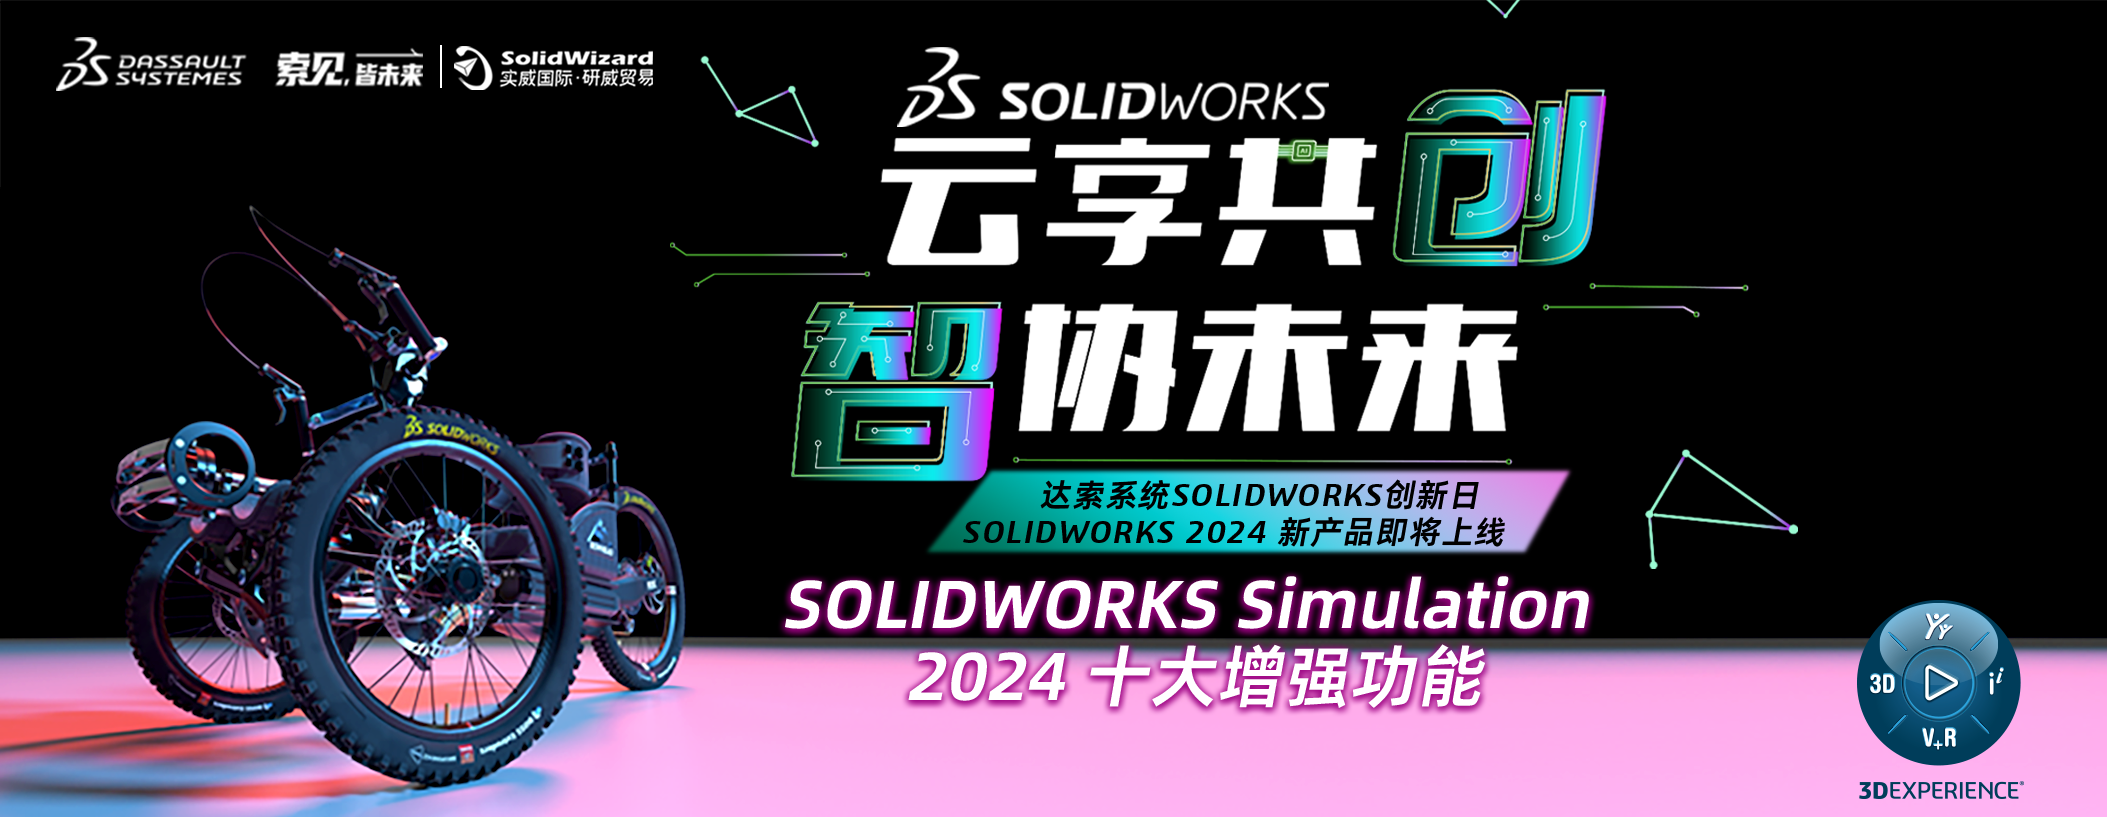 SOLIDWORKS Simulation 2024 十大增强功能来啦！增加这些功能→